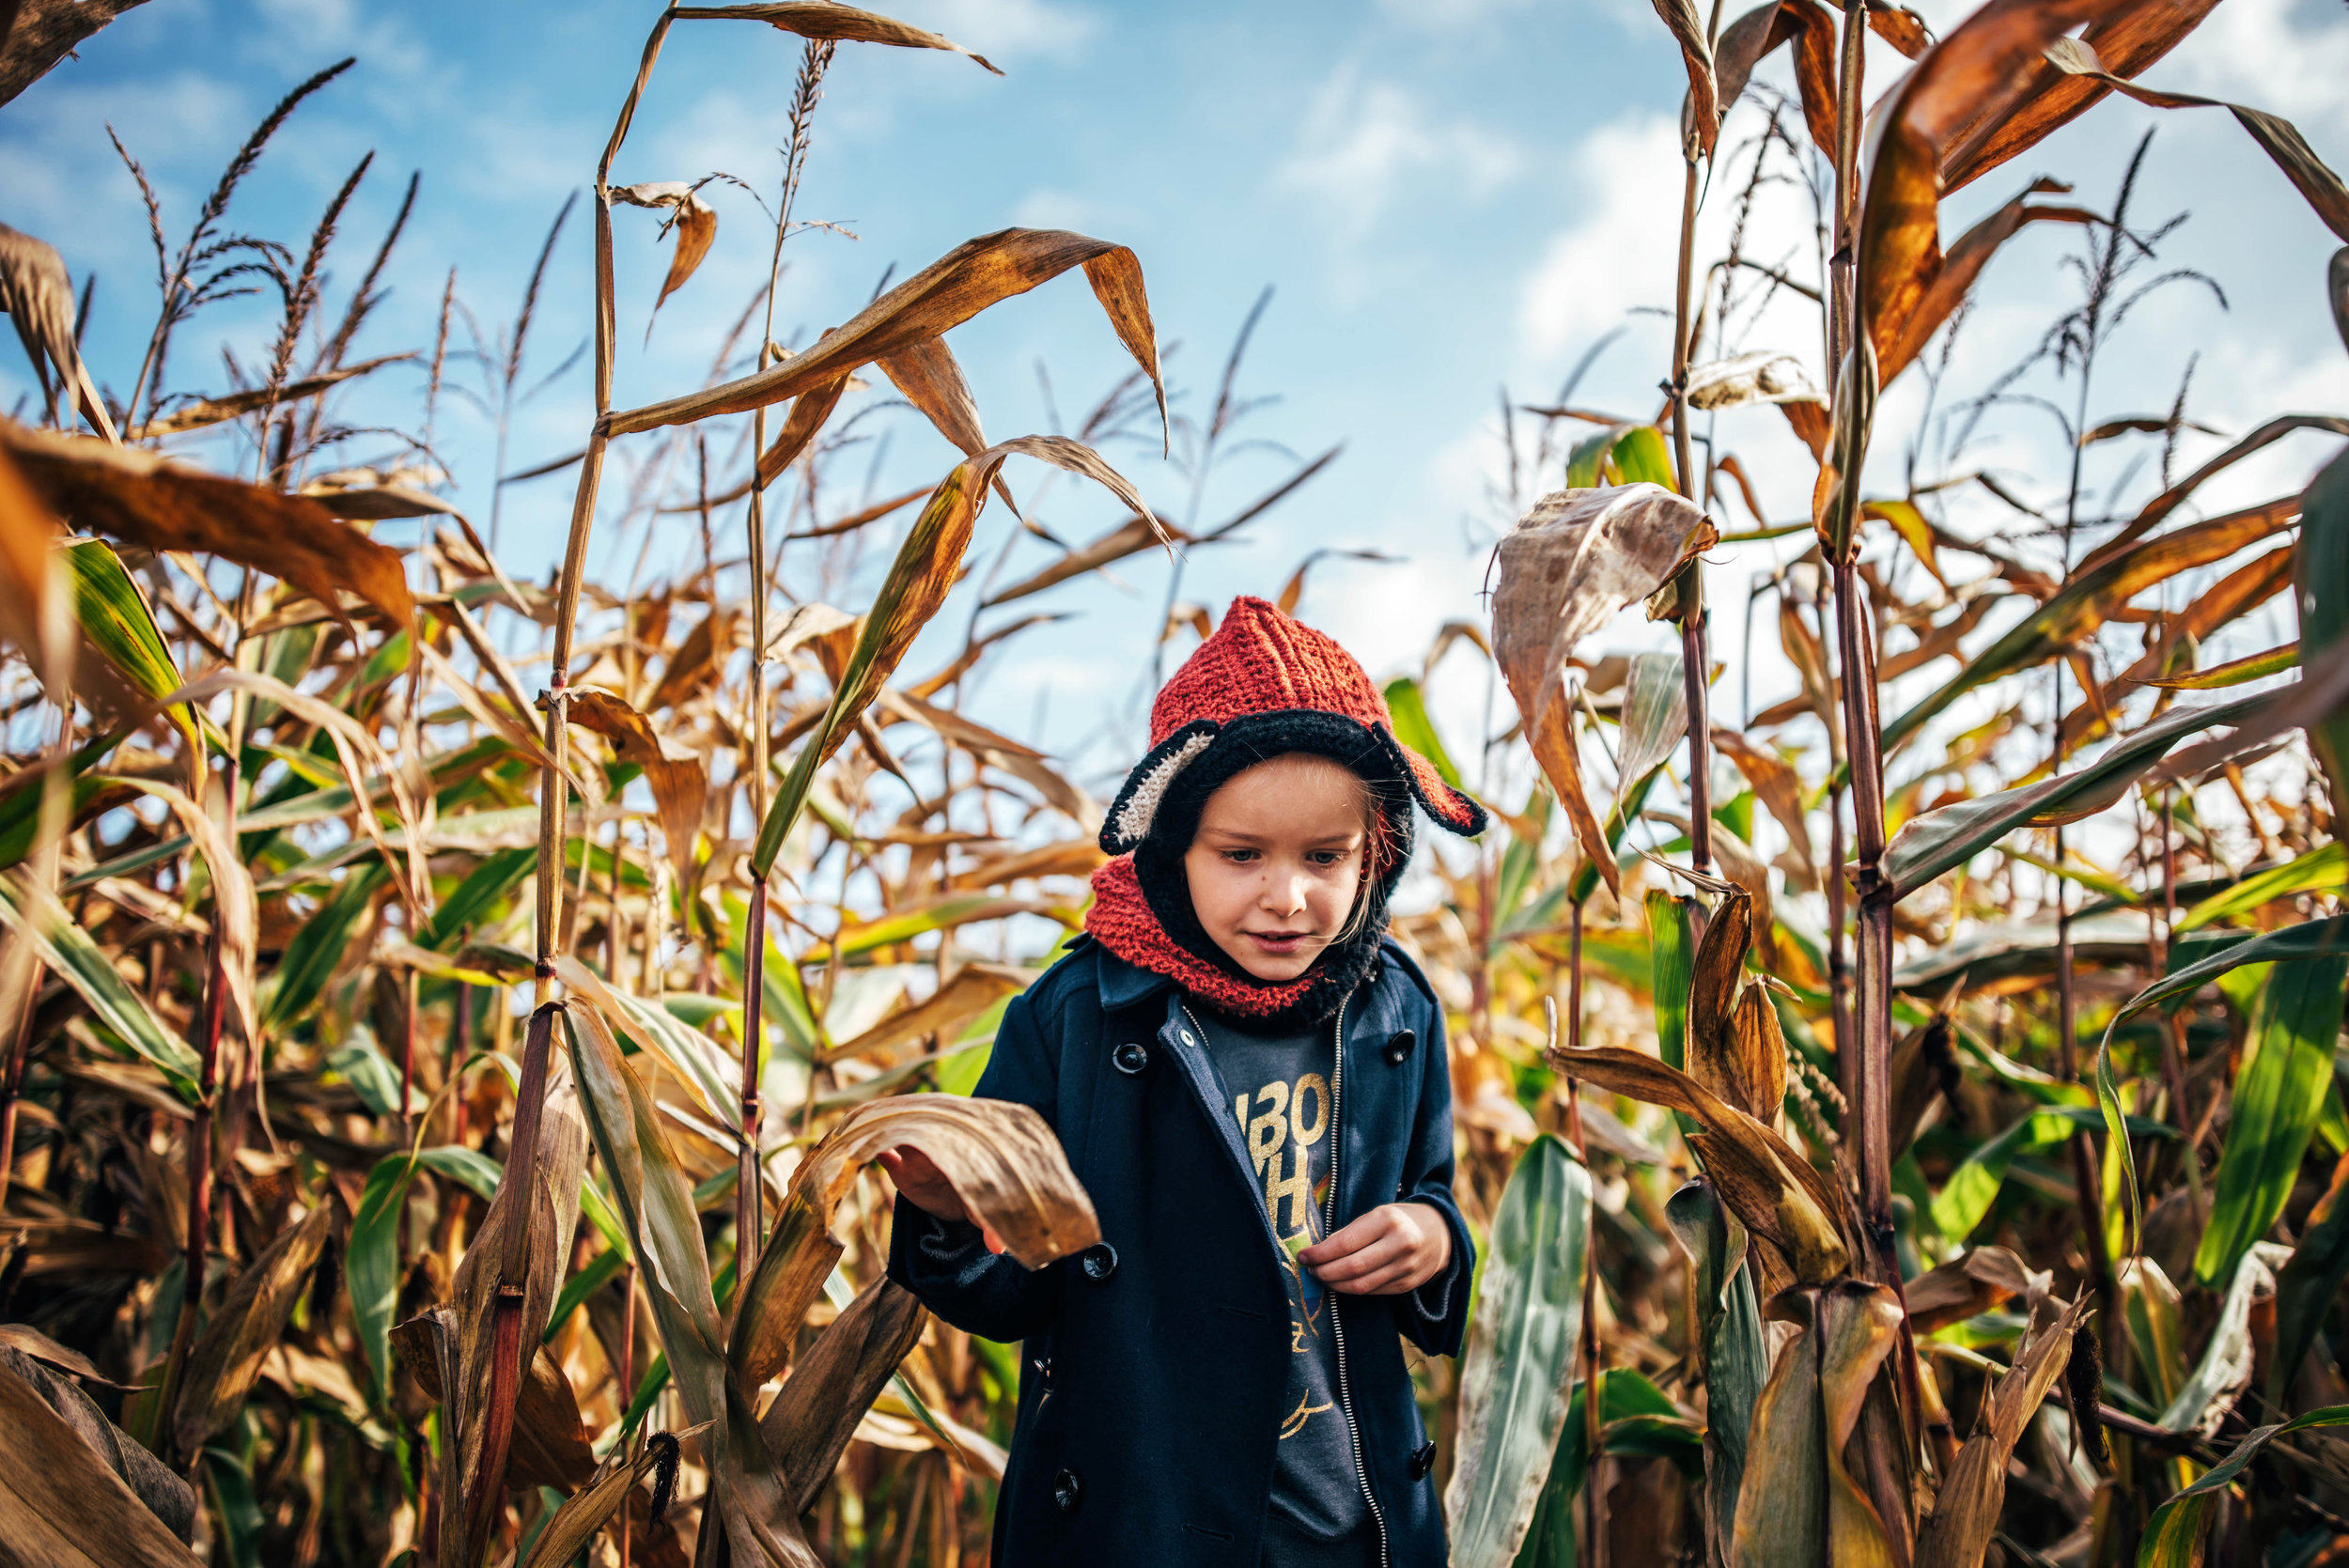 Little Girl in Fox Hat in Corn Maze Essex UK Documentary Portrait Photographer